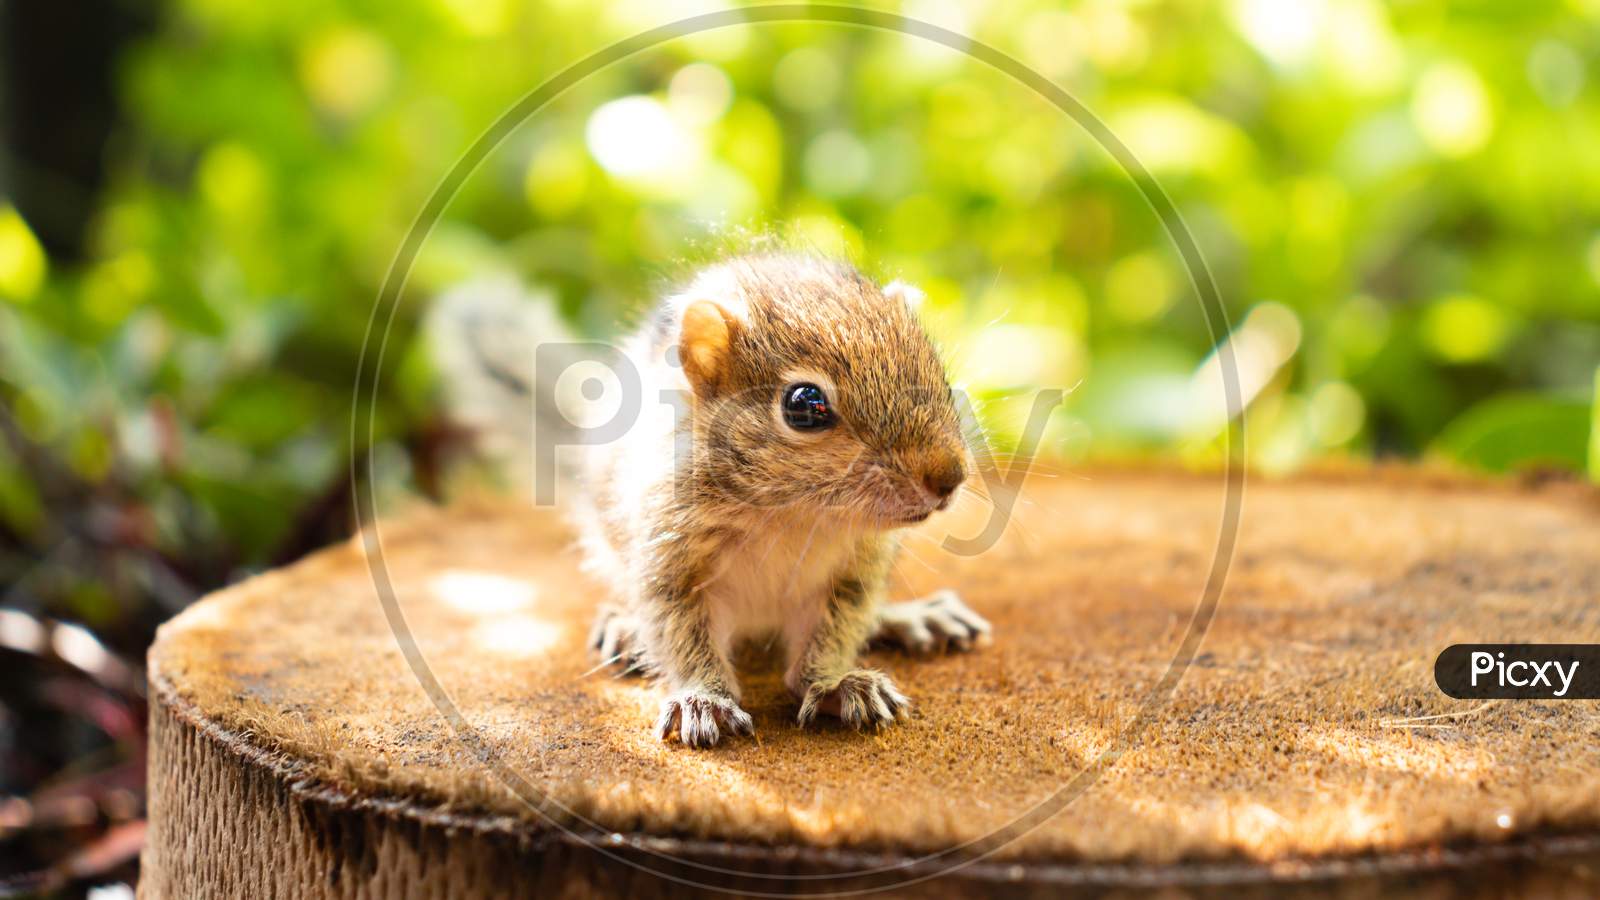 Cute Abandoned Baby Squirrel Looking At Camera